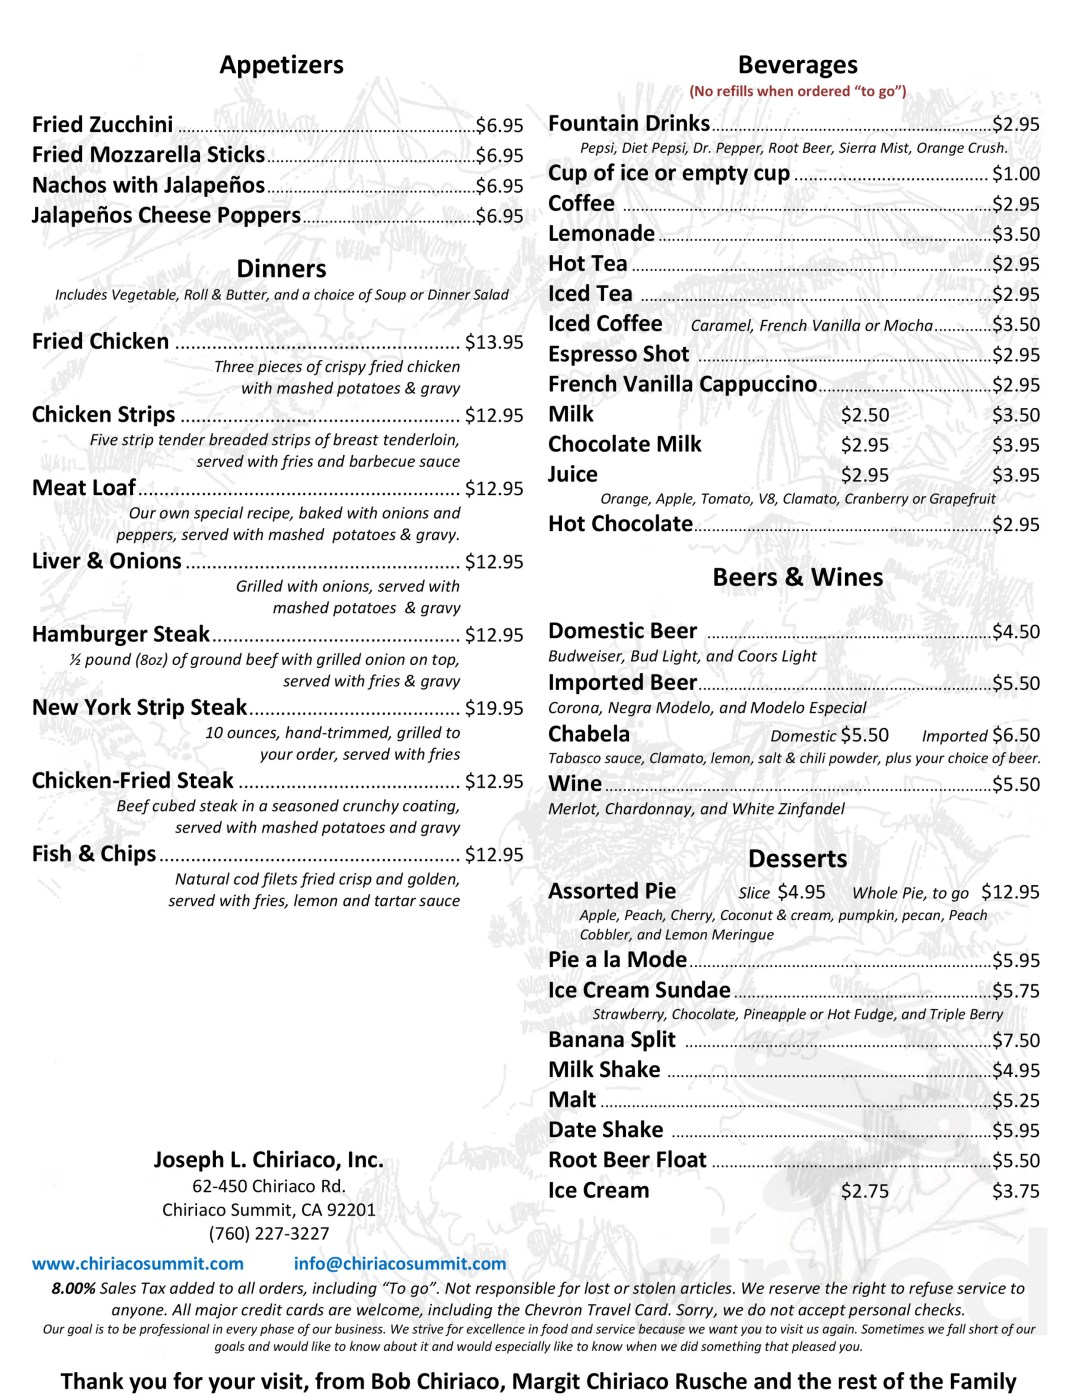 Picture of: Chiriaco Summit Restaurant menu in Chiriaco Summit, California, USA